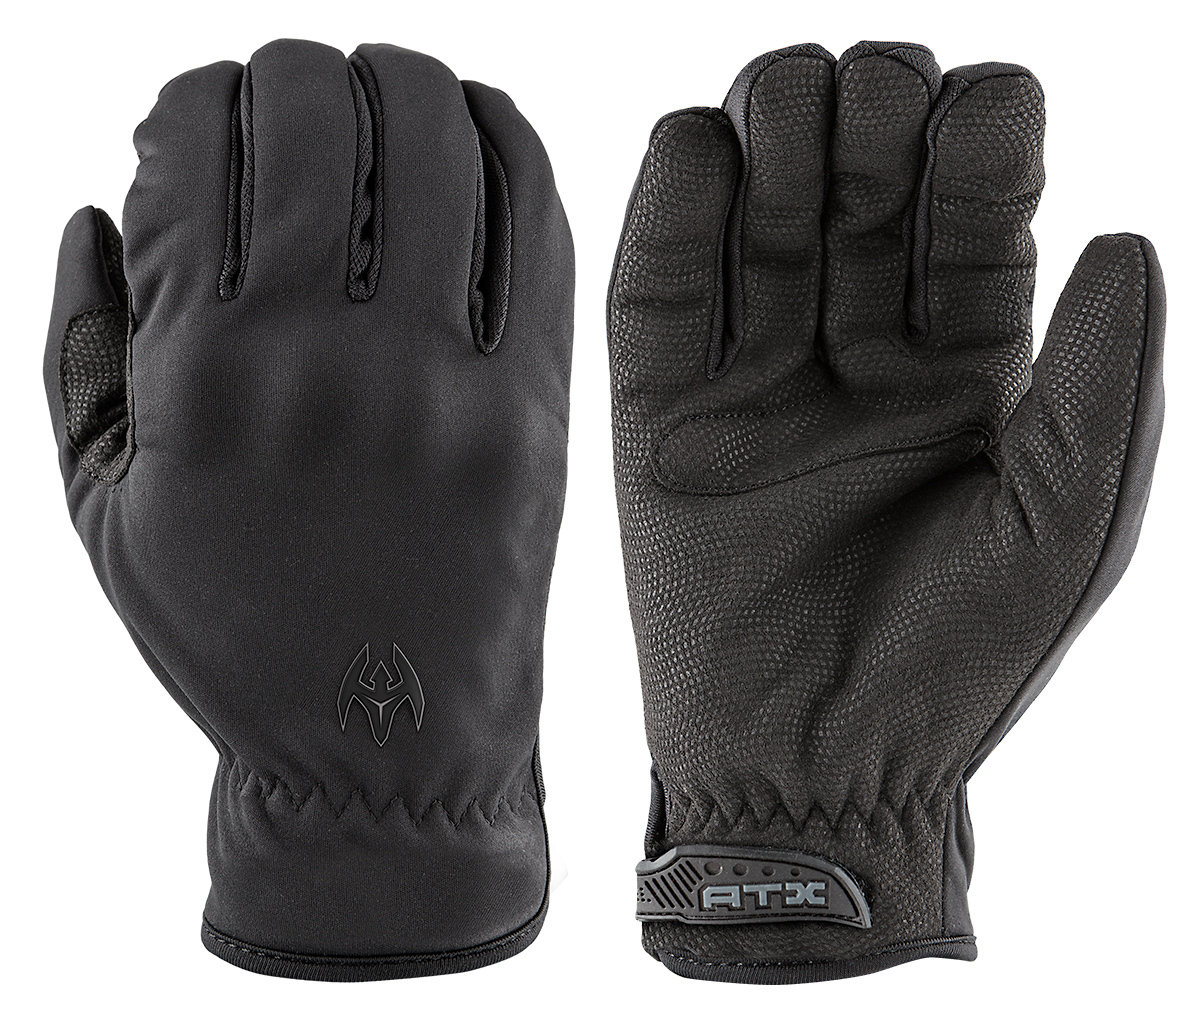 Winter Cut Resistant Patrol Gloves